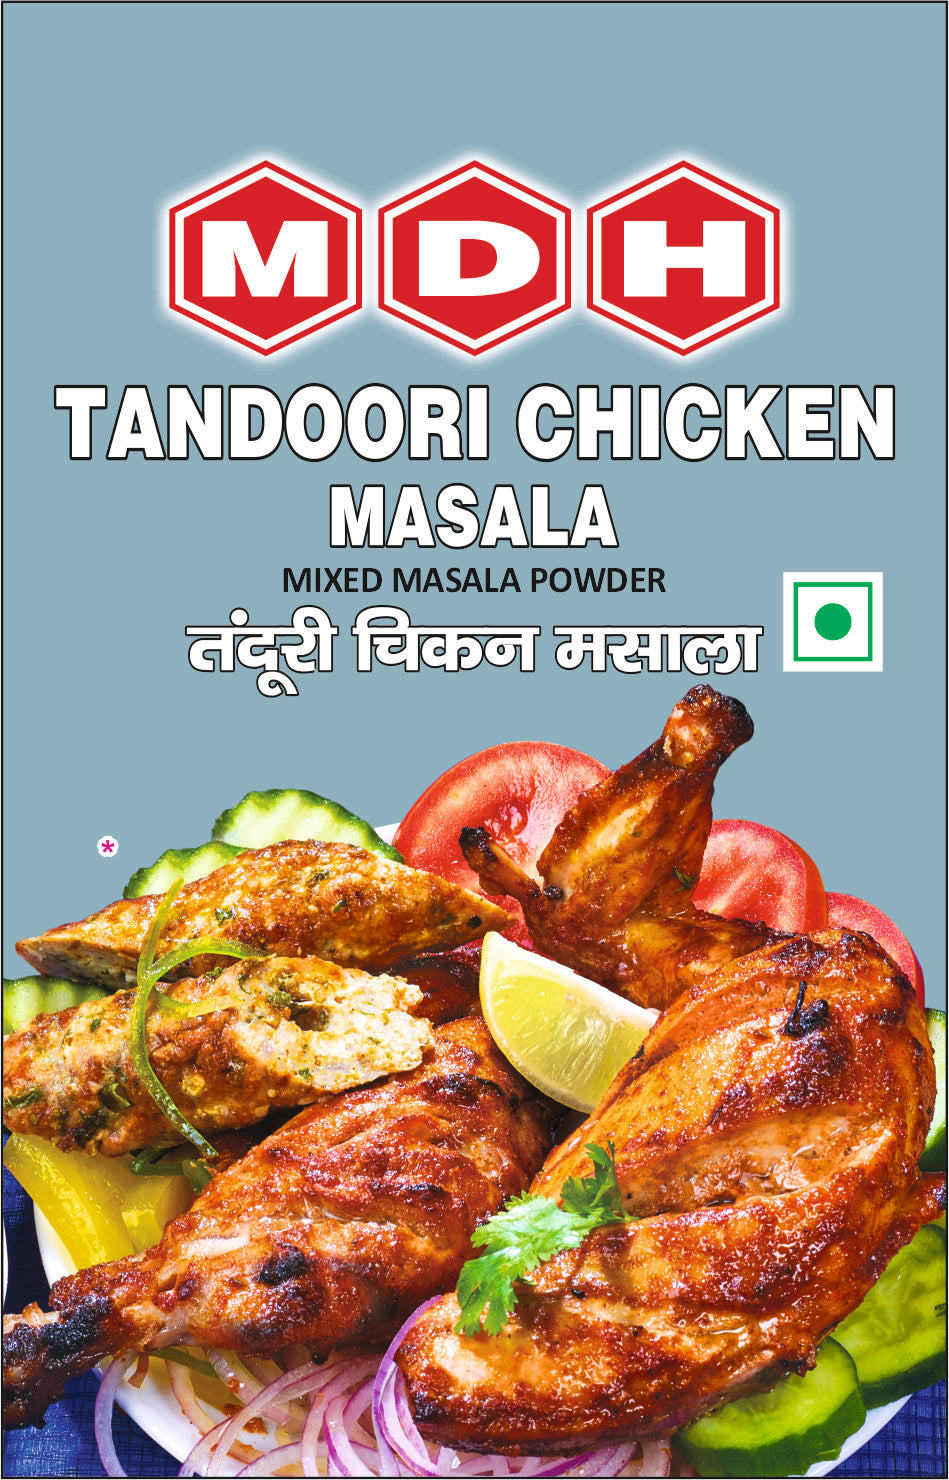 MDH-Tandoori Chicken Masala-100g